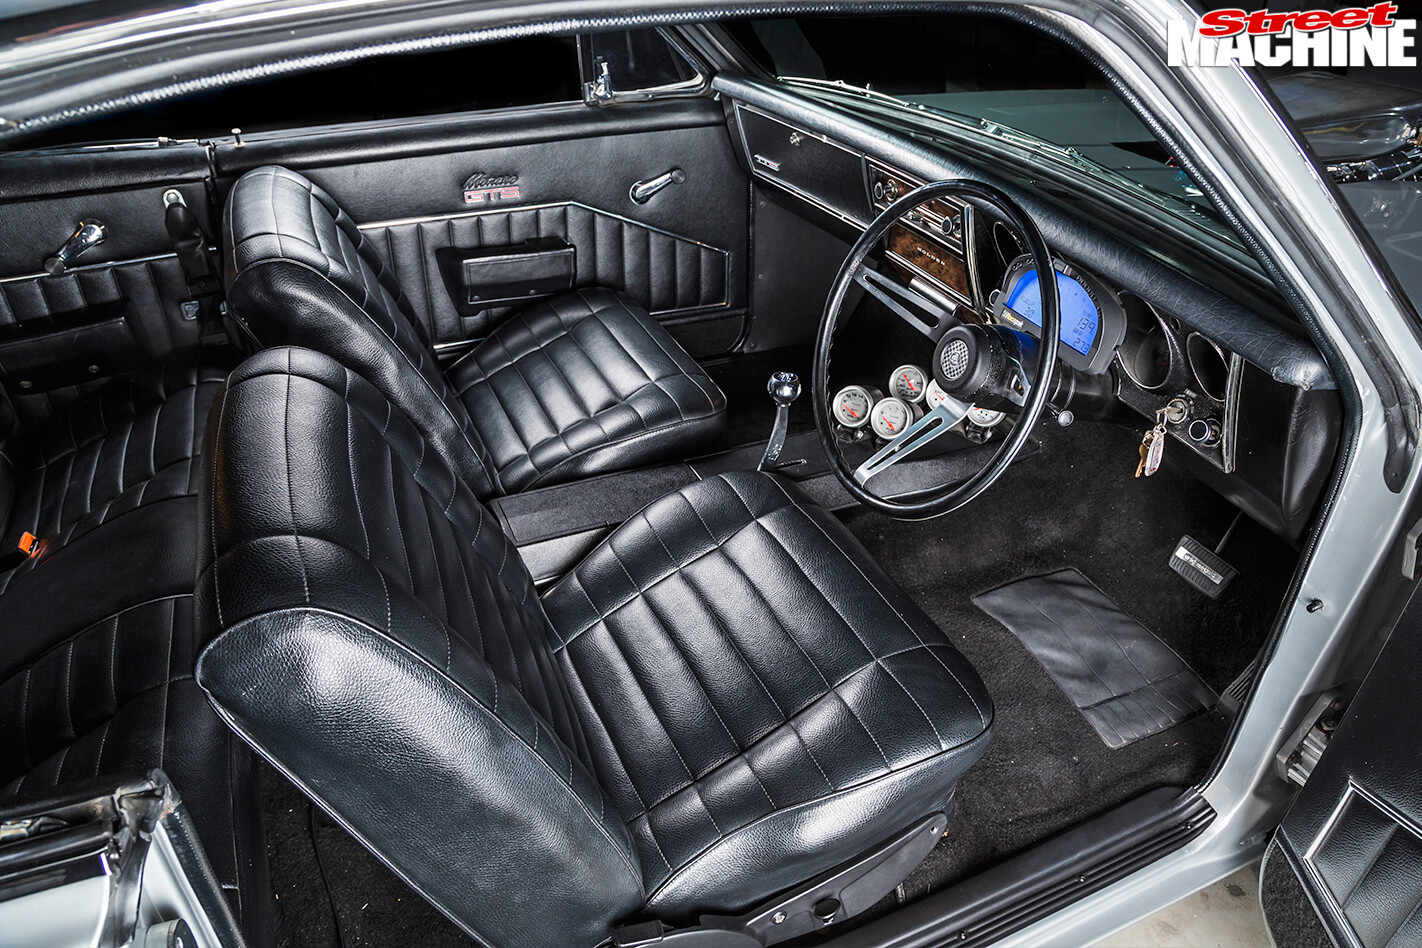 Holden -HG-Monaro -interior -front -2